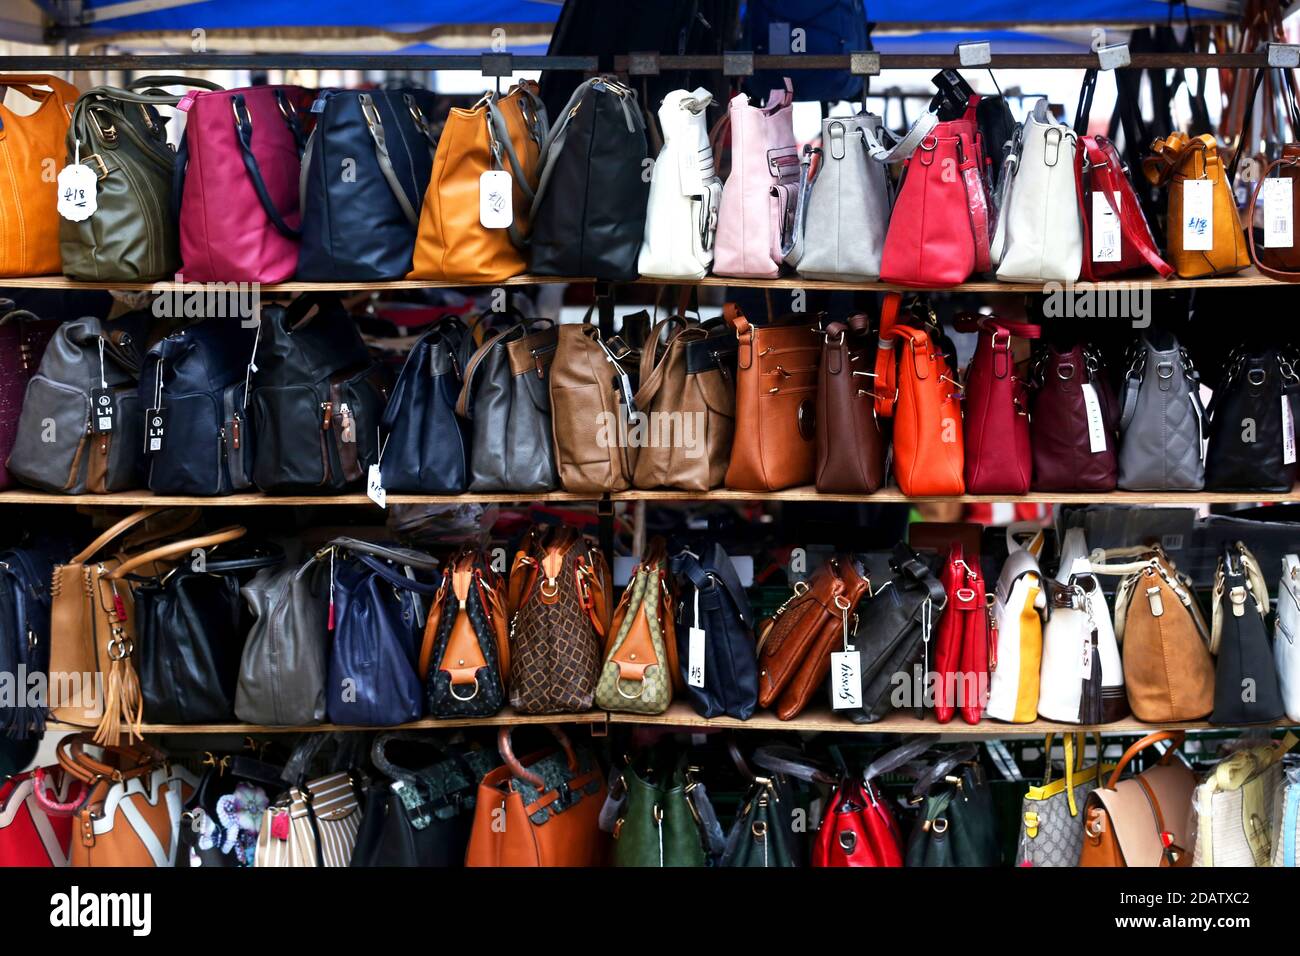 Designer handbag for sale Stock Photo - Alamy